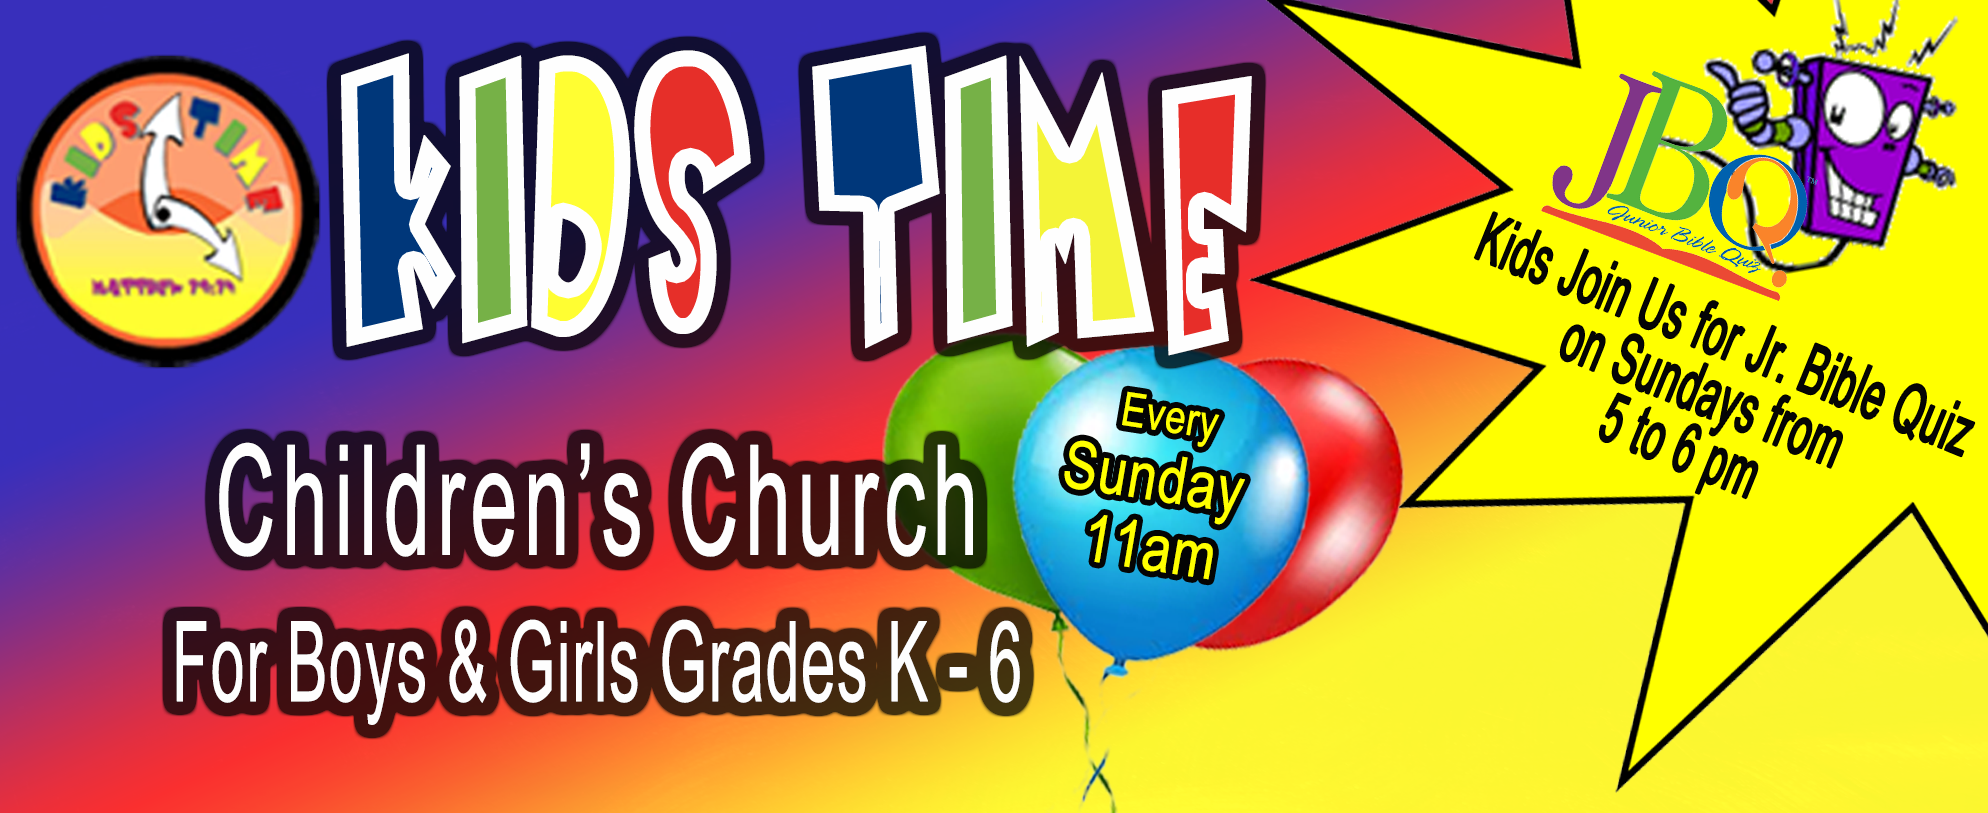 KidsTime - Sunday 11am